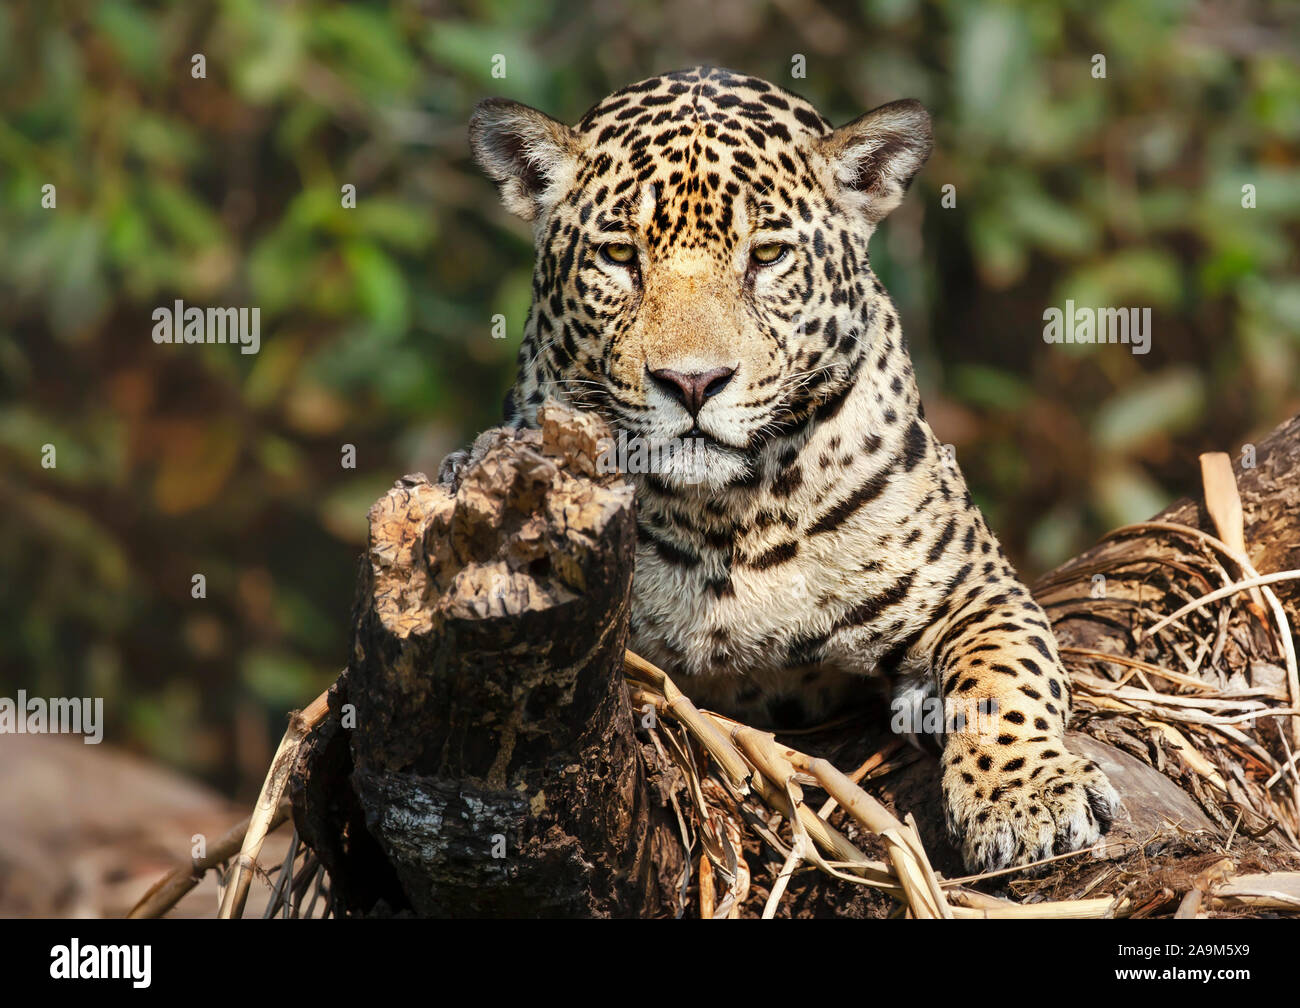 Close up of a Jaguar lying on a fallen tree, Pantanal, Brazil. Stock Photo